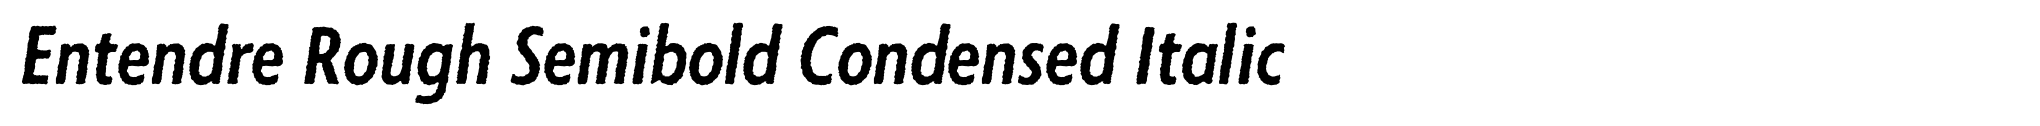 Entendre Rough Semibold Condensed Italic image